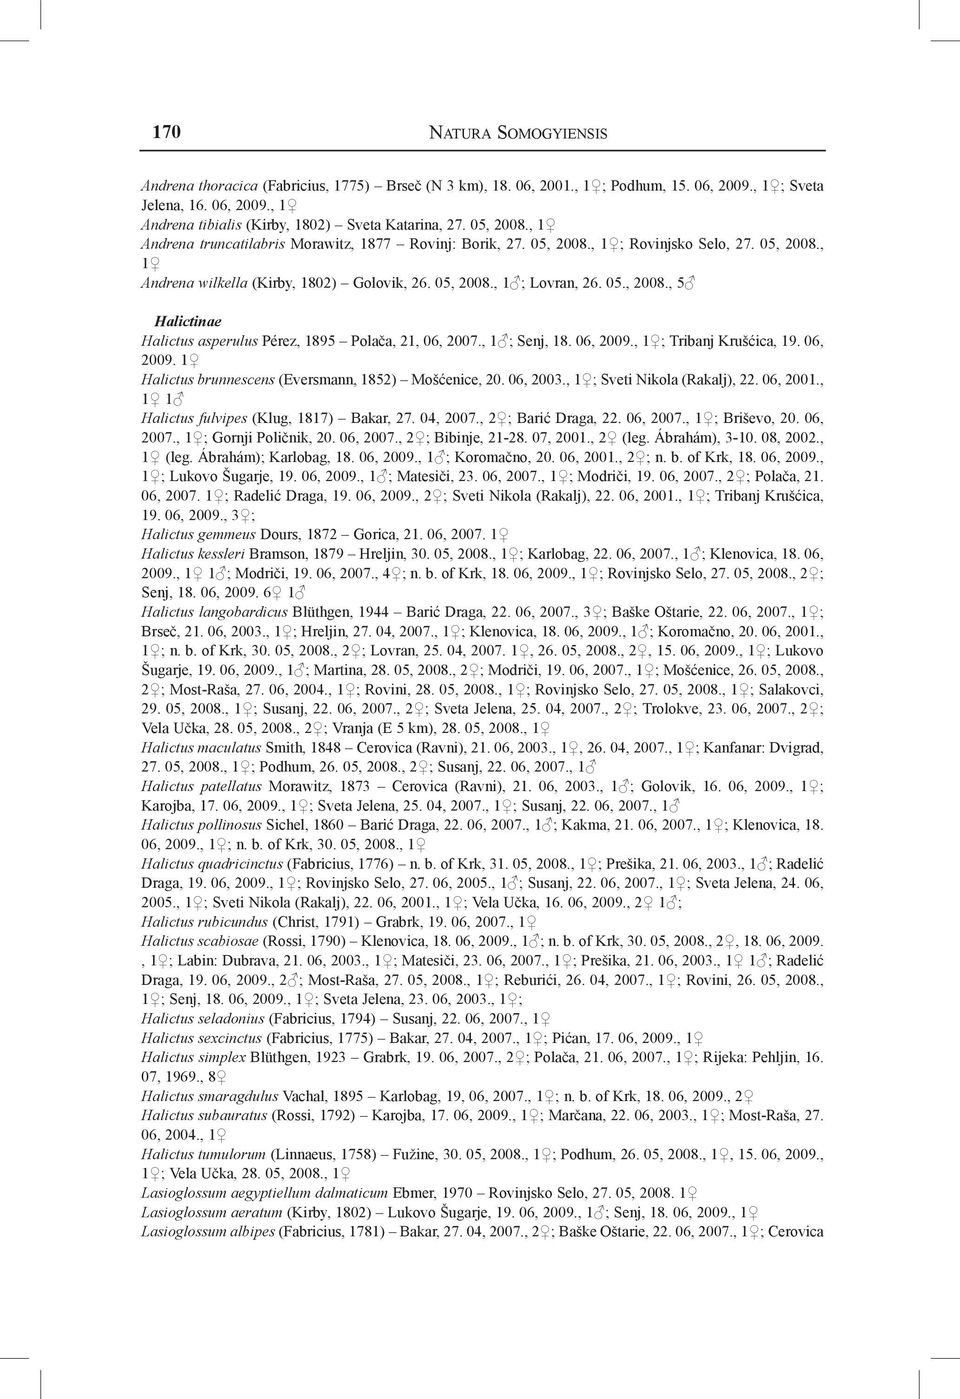 , 1 ; Senj, 18. 06, 2009., 1 ; Tribanj Krušćica, 19. 06, 2009. 1 Halictus brunnescens (Eversmann, 1852) Mošćenice, 20. 06, 2003., 1 ; Sveti Nikola (Rakalj), 22. 06, 2001.